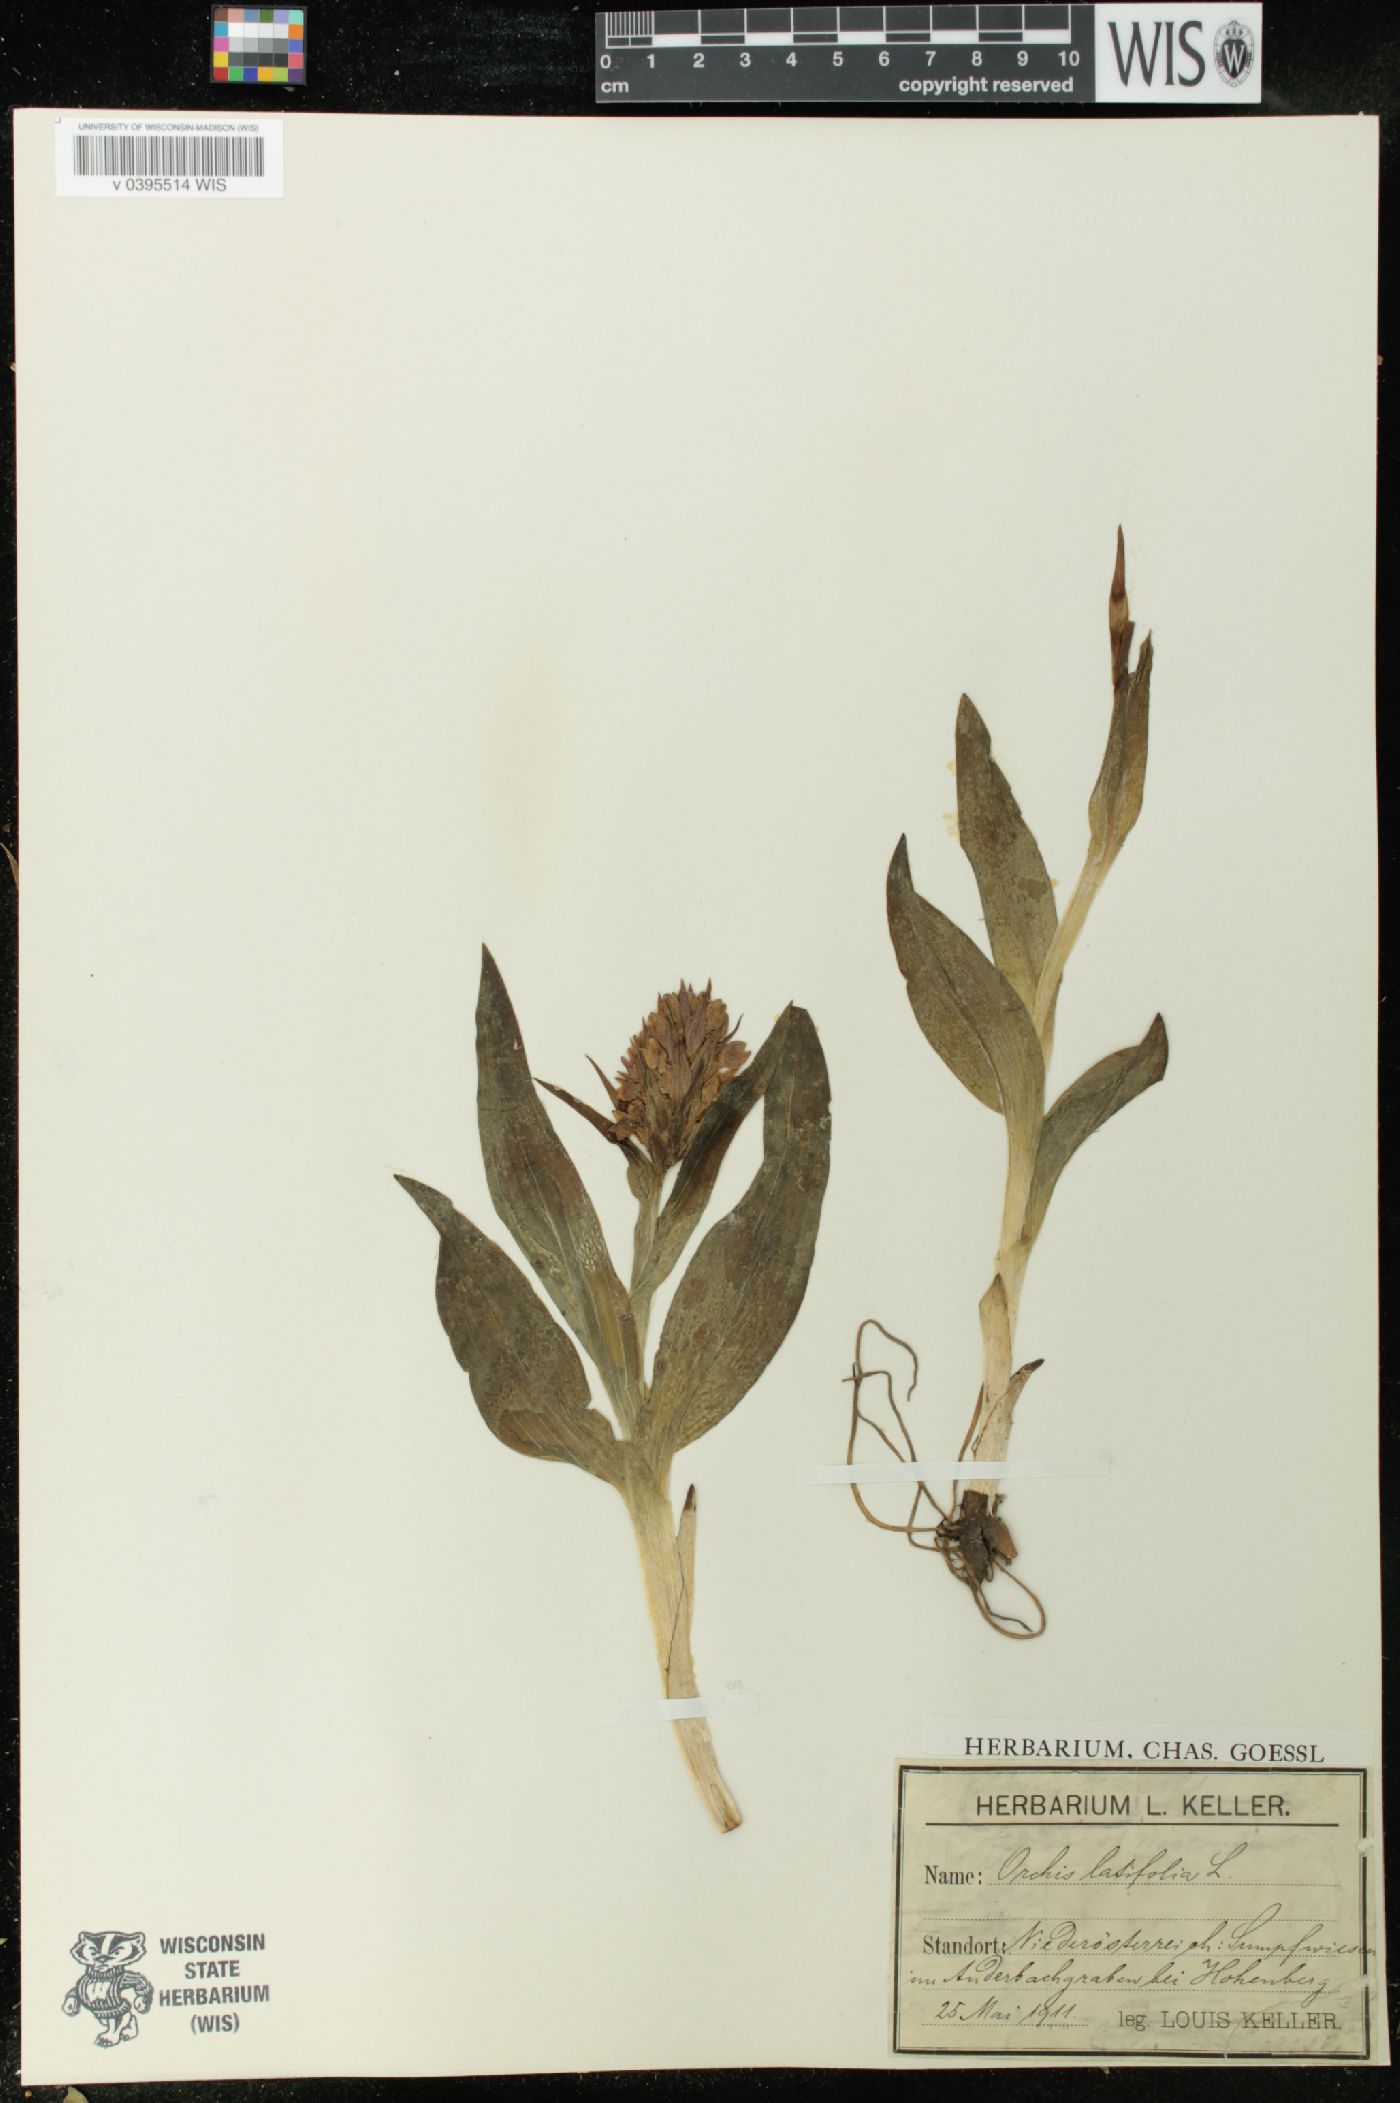 Dactylorhiza purpurella image